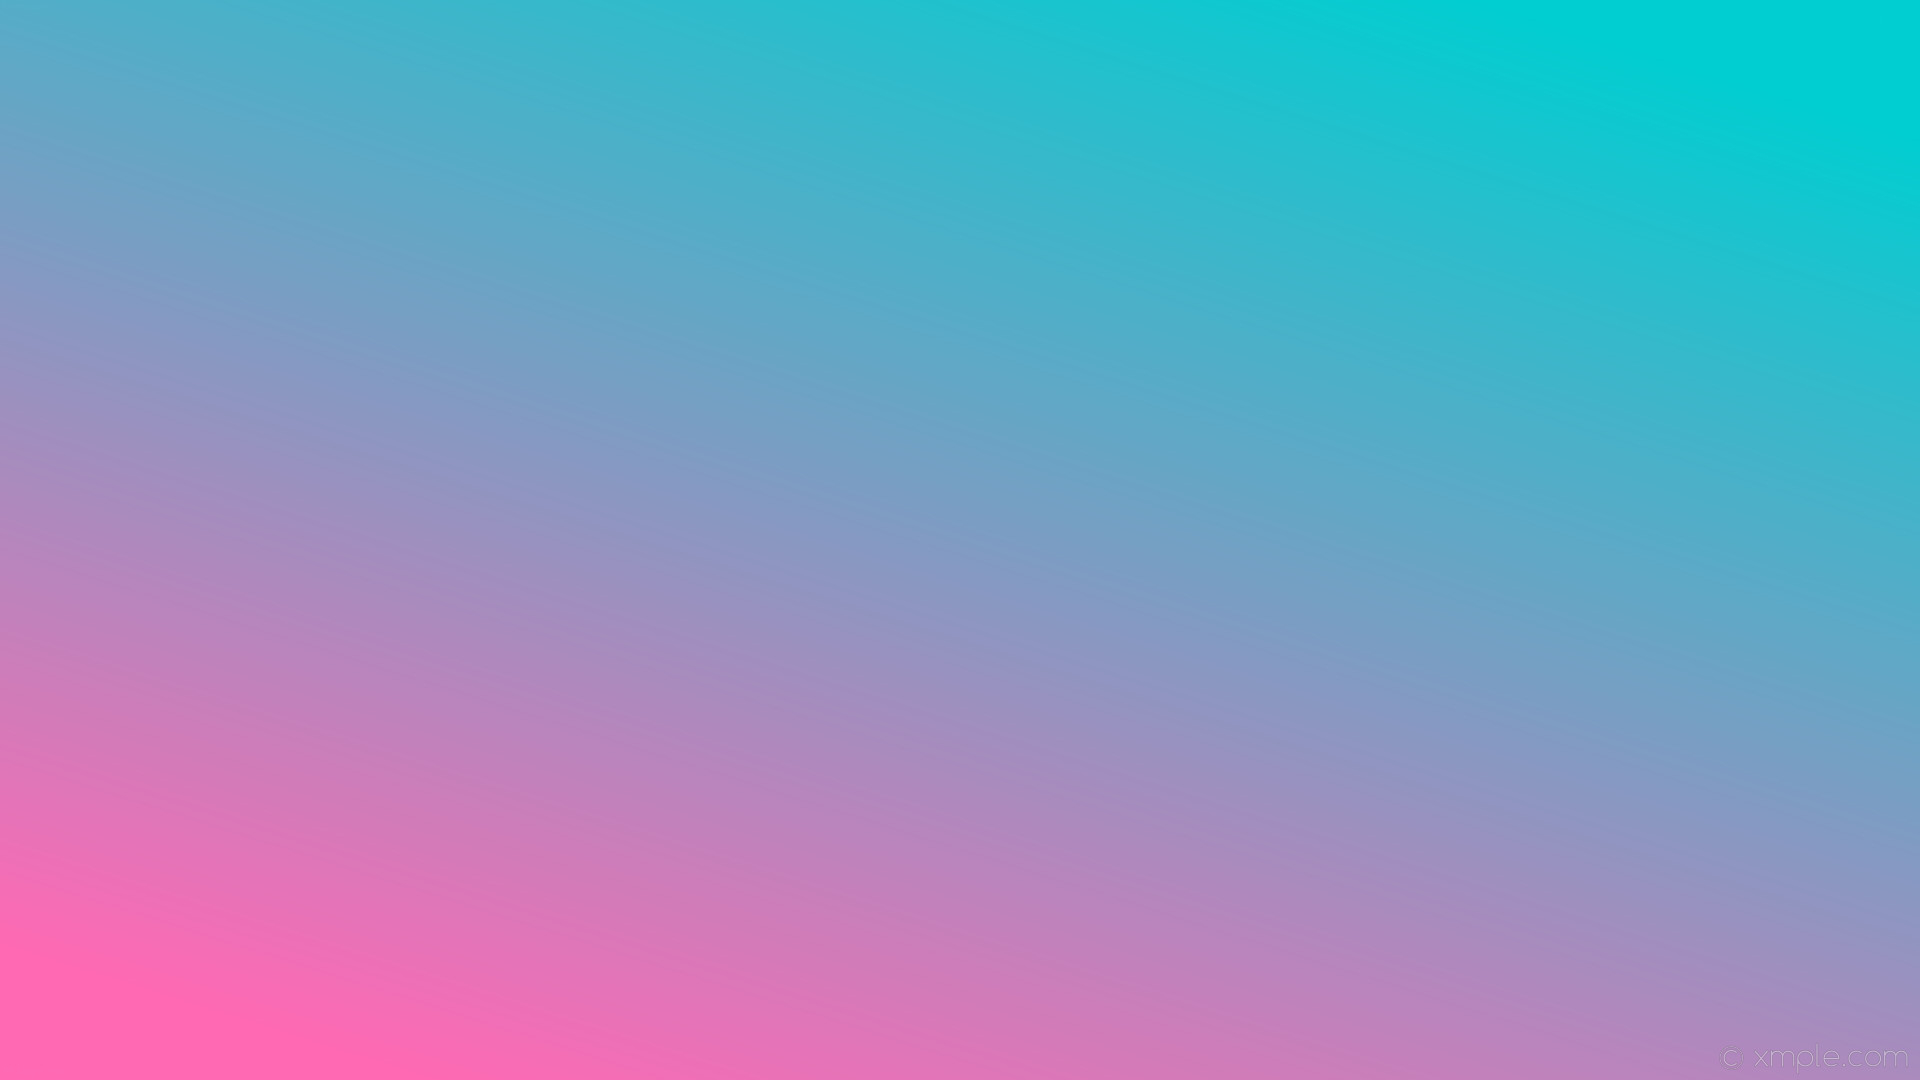 1920x1080 wallpaper blue gradient pink linear hot pink dark turquoise #ff69b4 #00ced1  225Â°